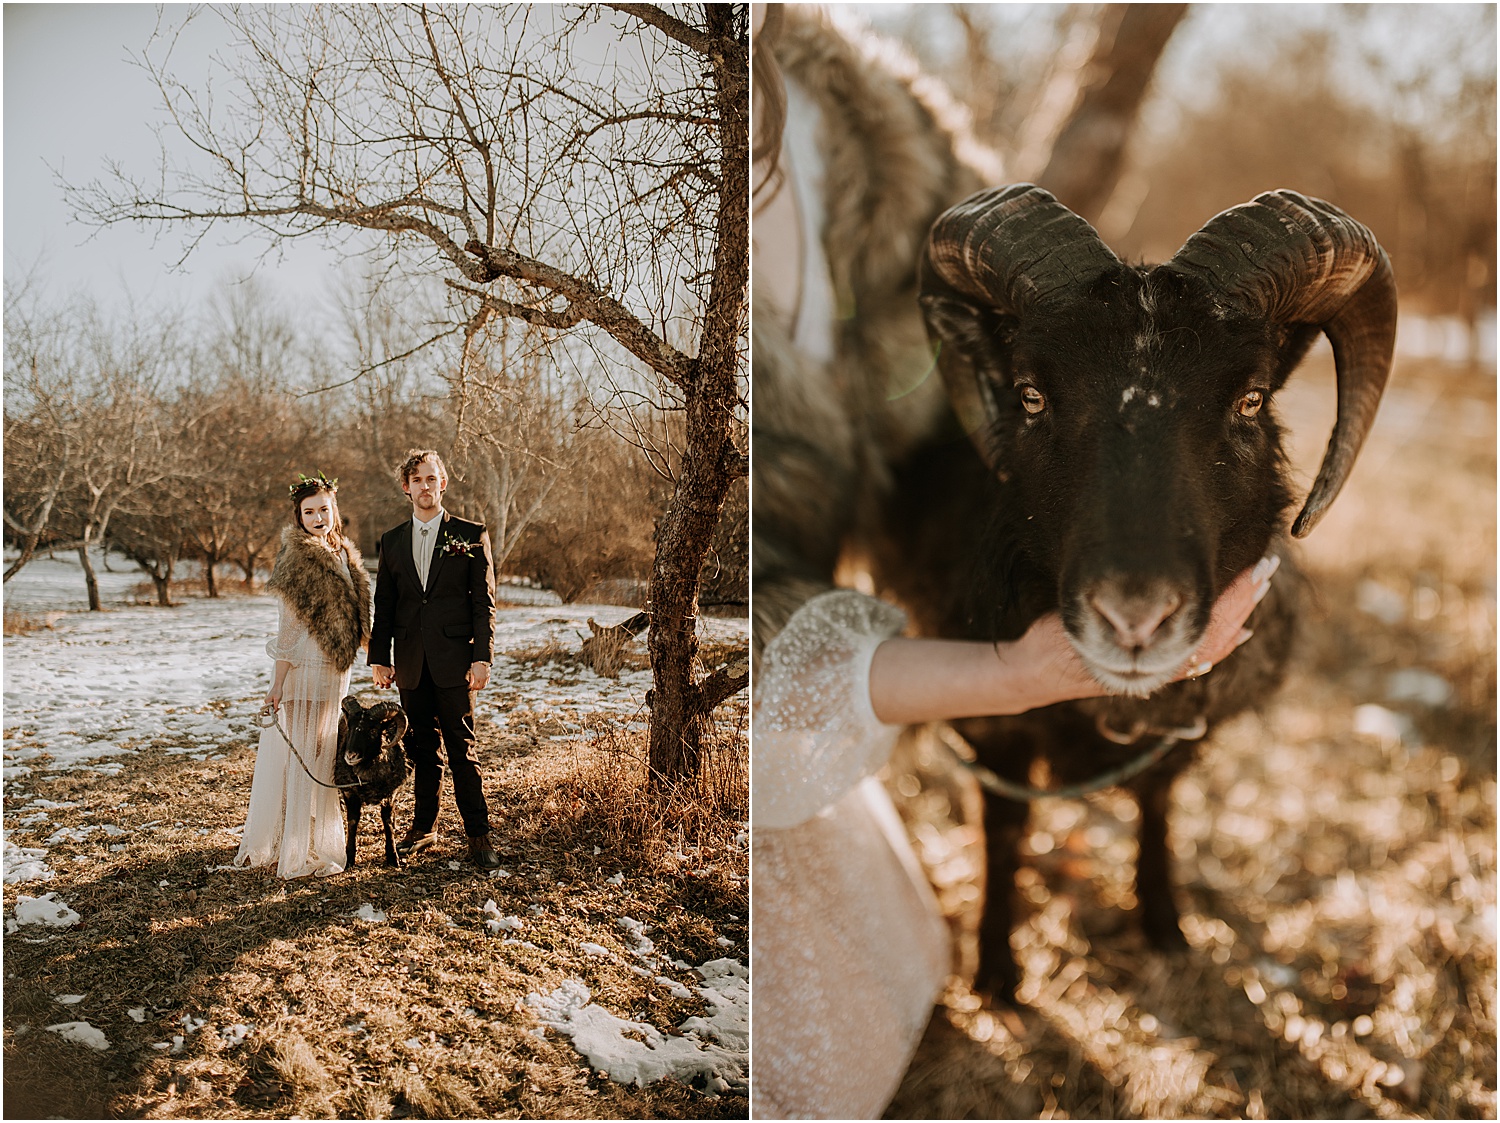 Maple Rock Farm Wedding with Goats